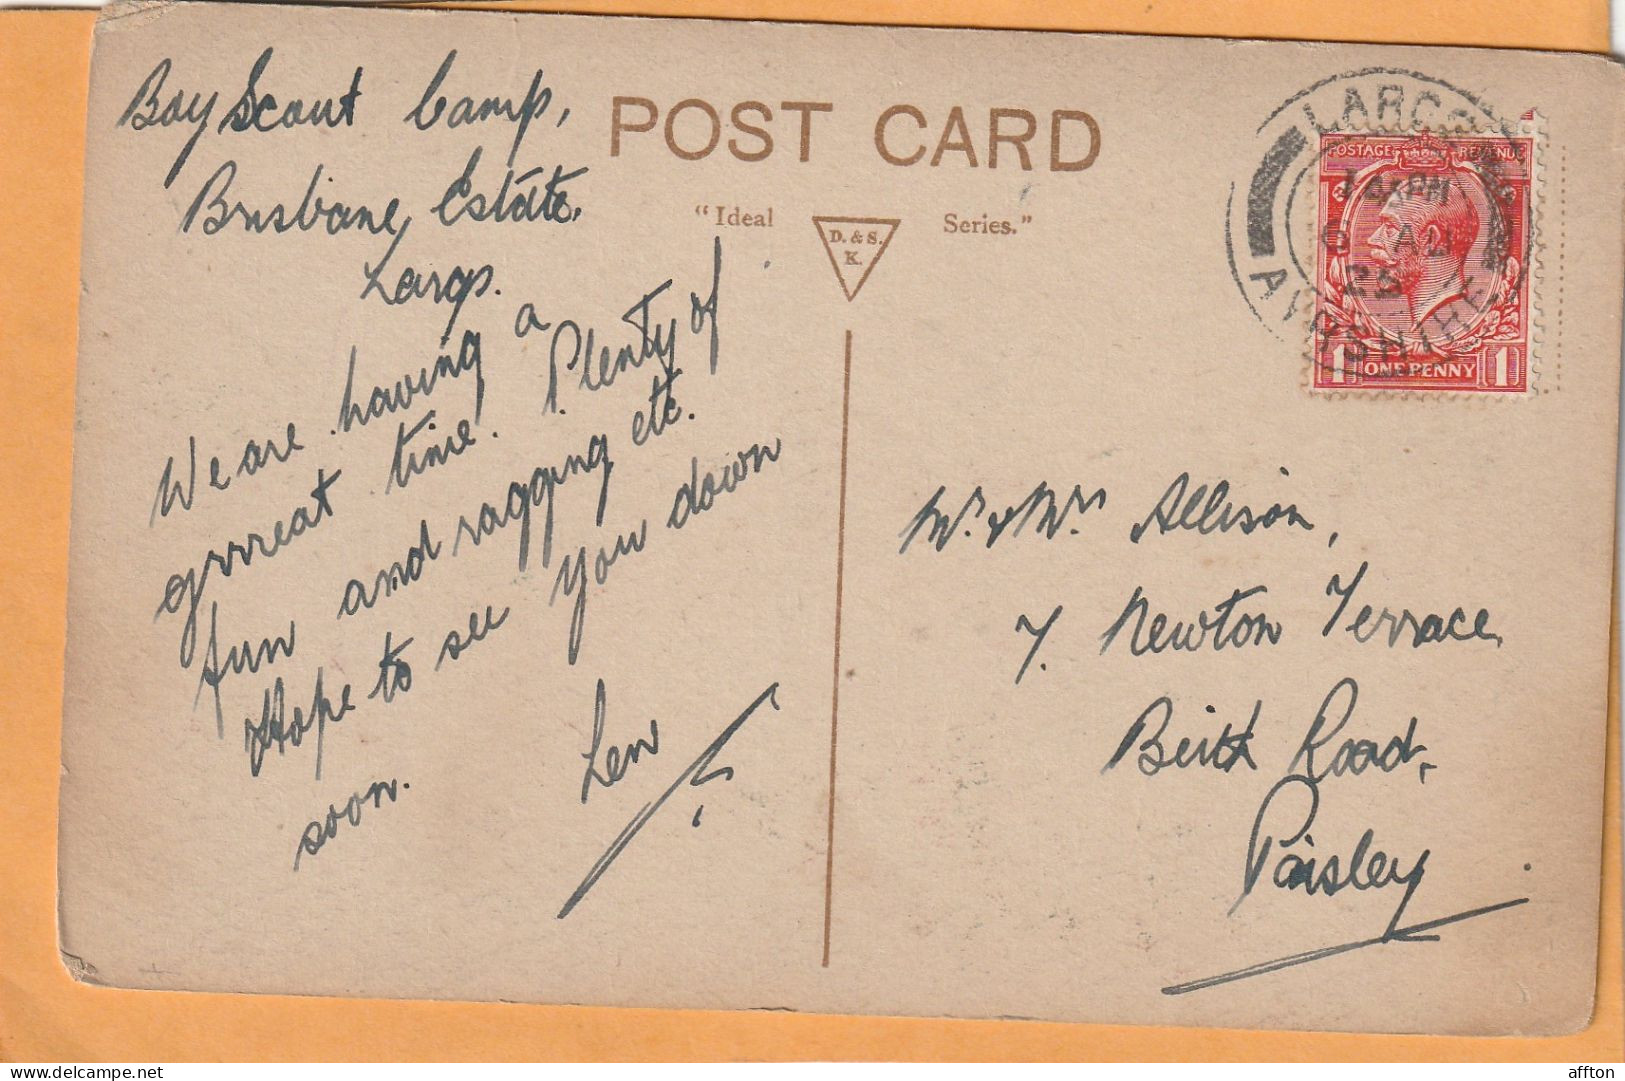 Largs UK 1925 Postcard - Ayrshire